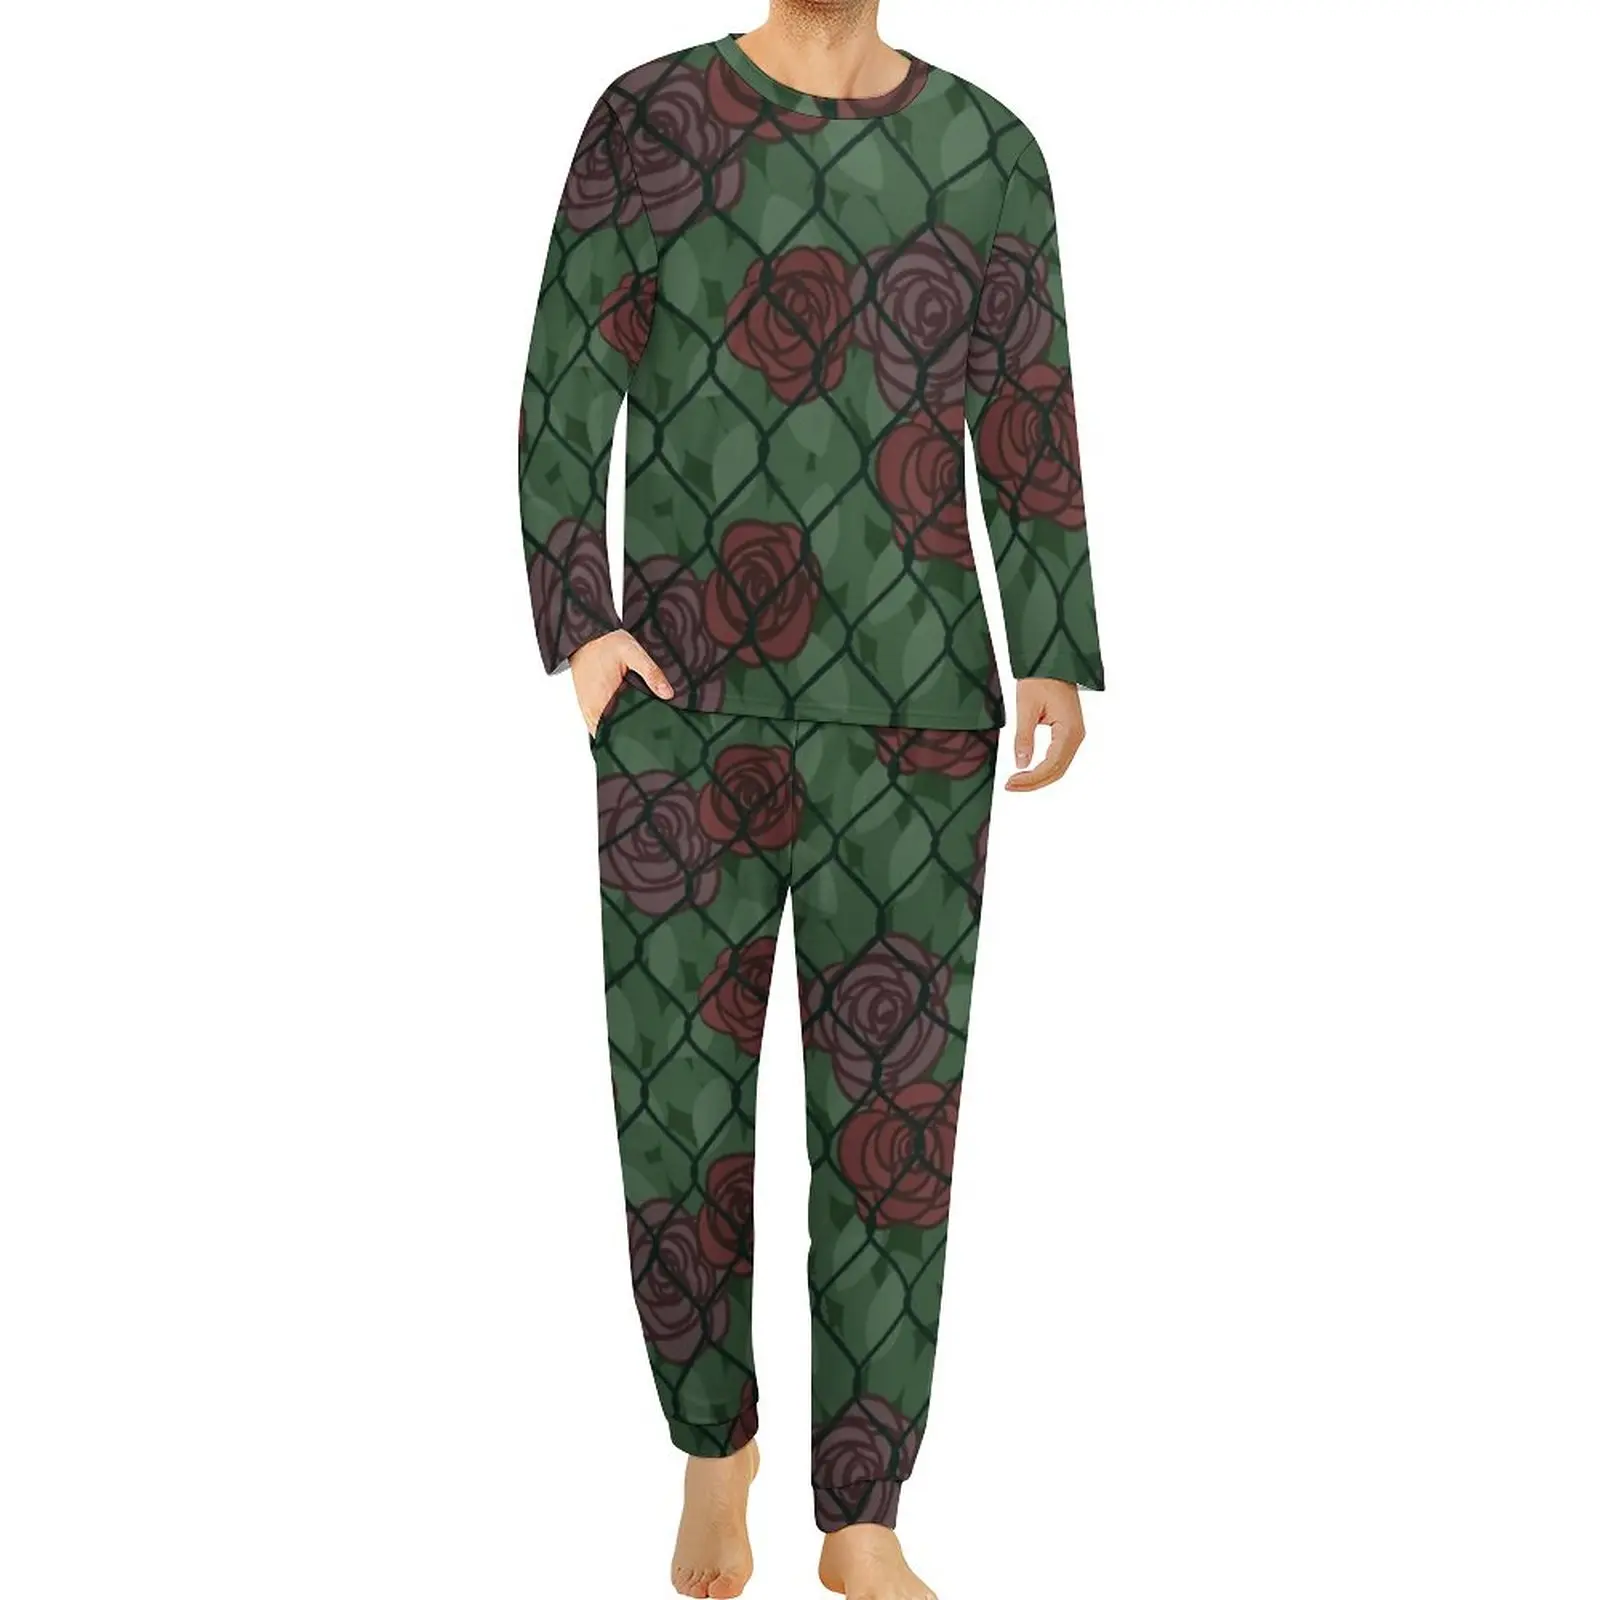 Chain Print Pajamas Rosebush Flower Man Long Sleeves Romantic Pajama Sets 2 Pieces Casual Autumn Graphic Sleepwear Birthday Gift